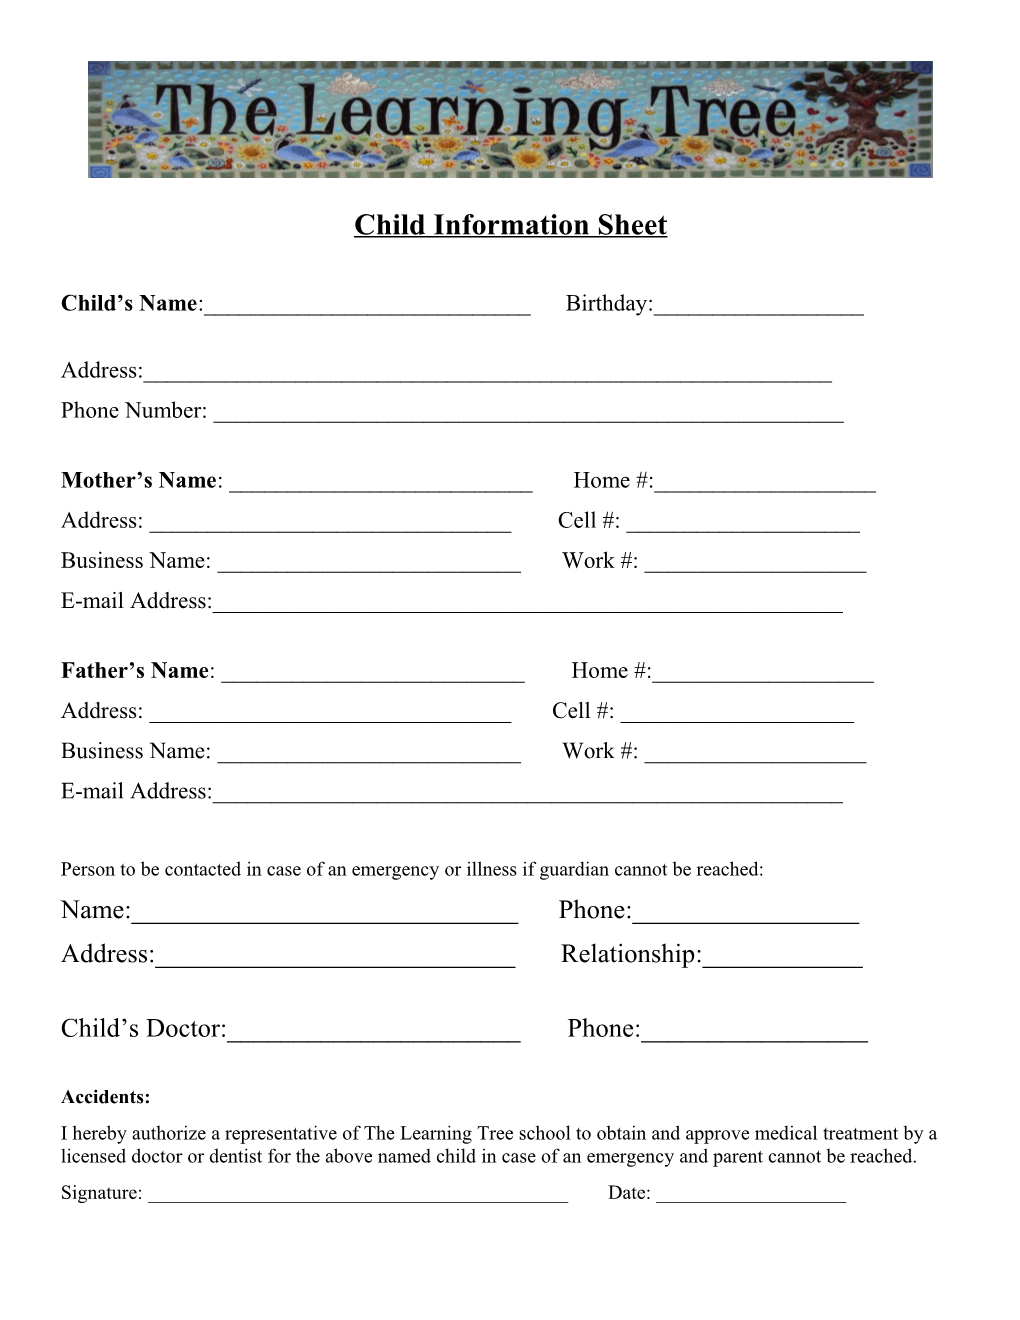 Child Information Sheet